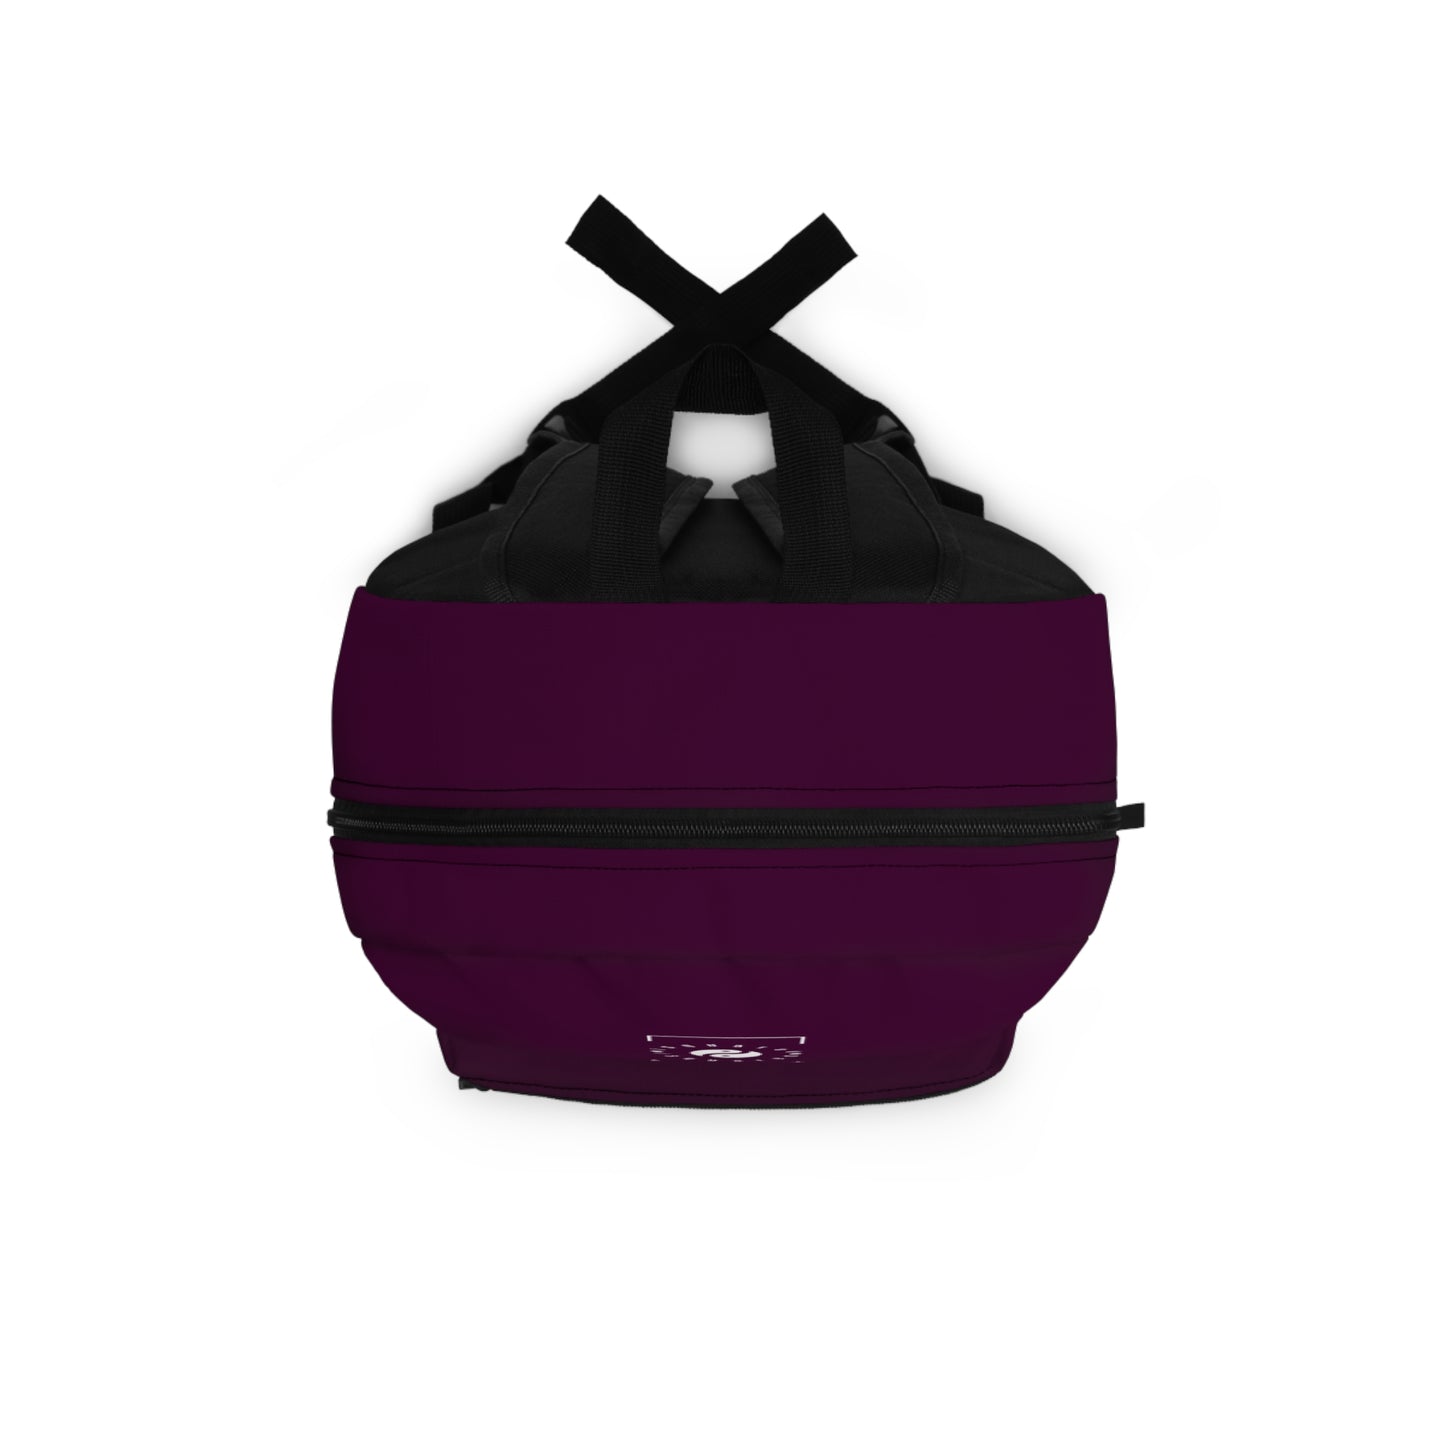 Deep Burgundy - Backpack